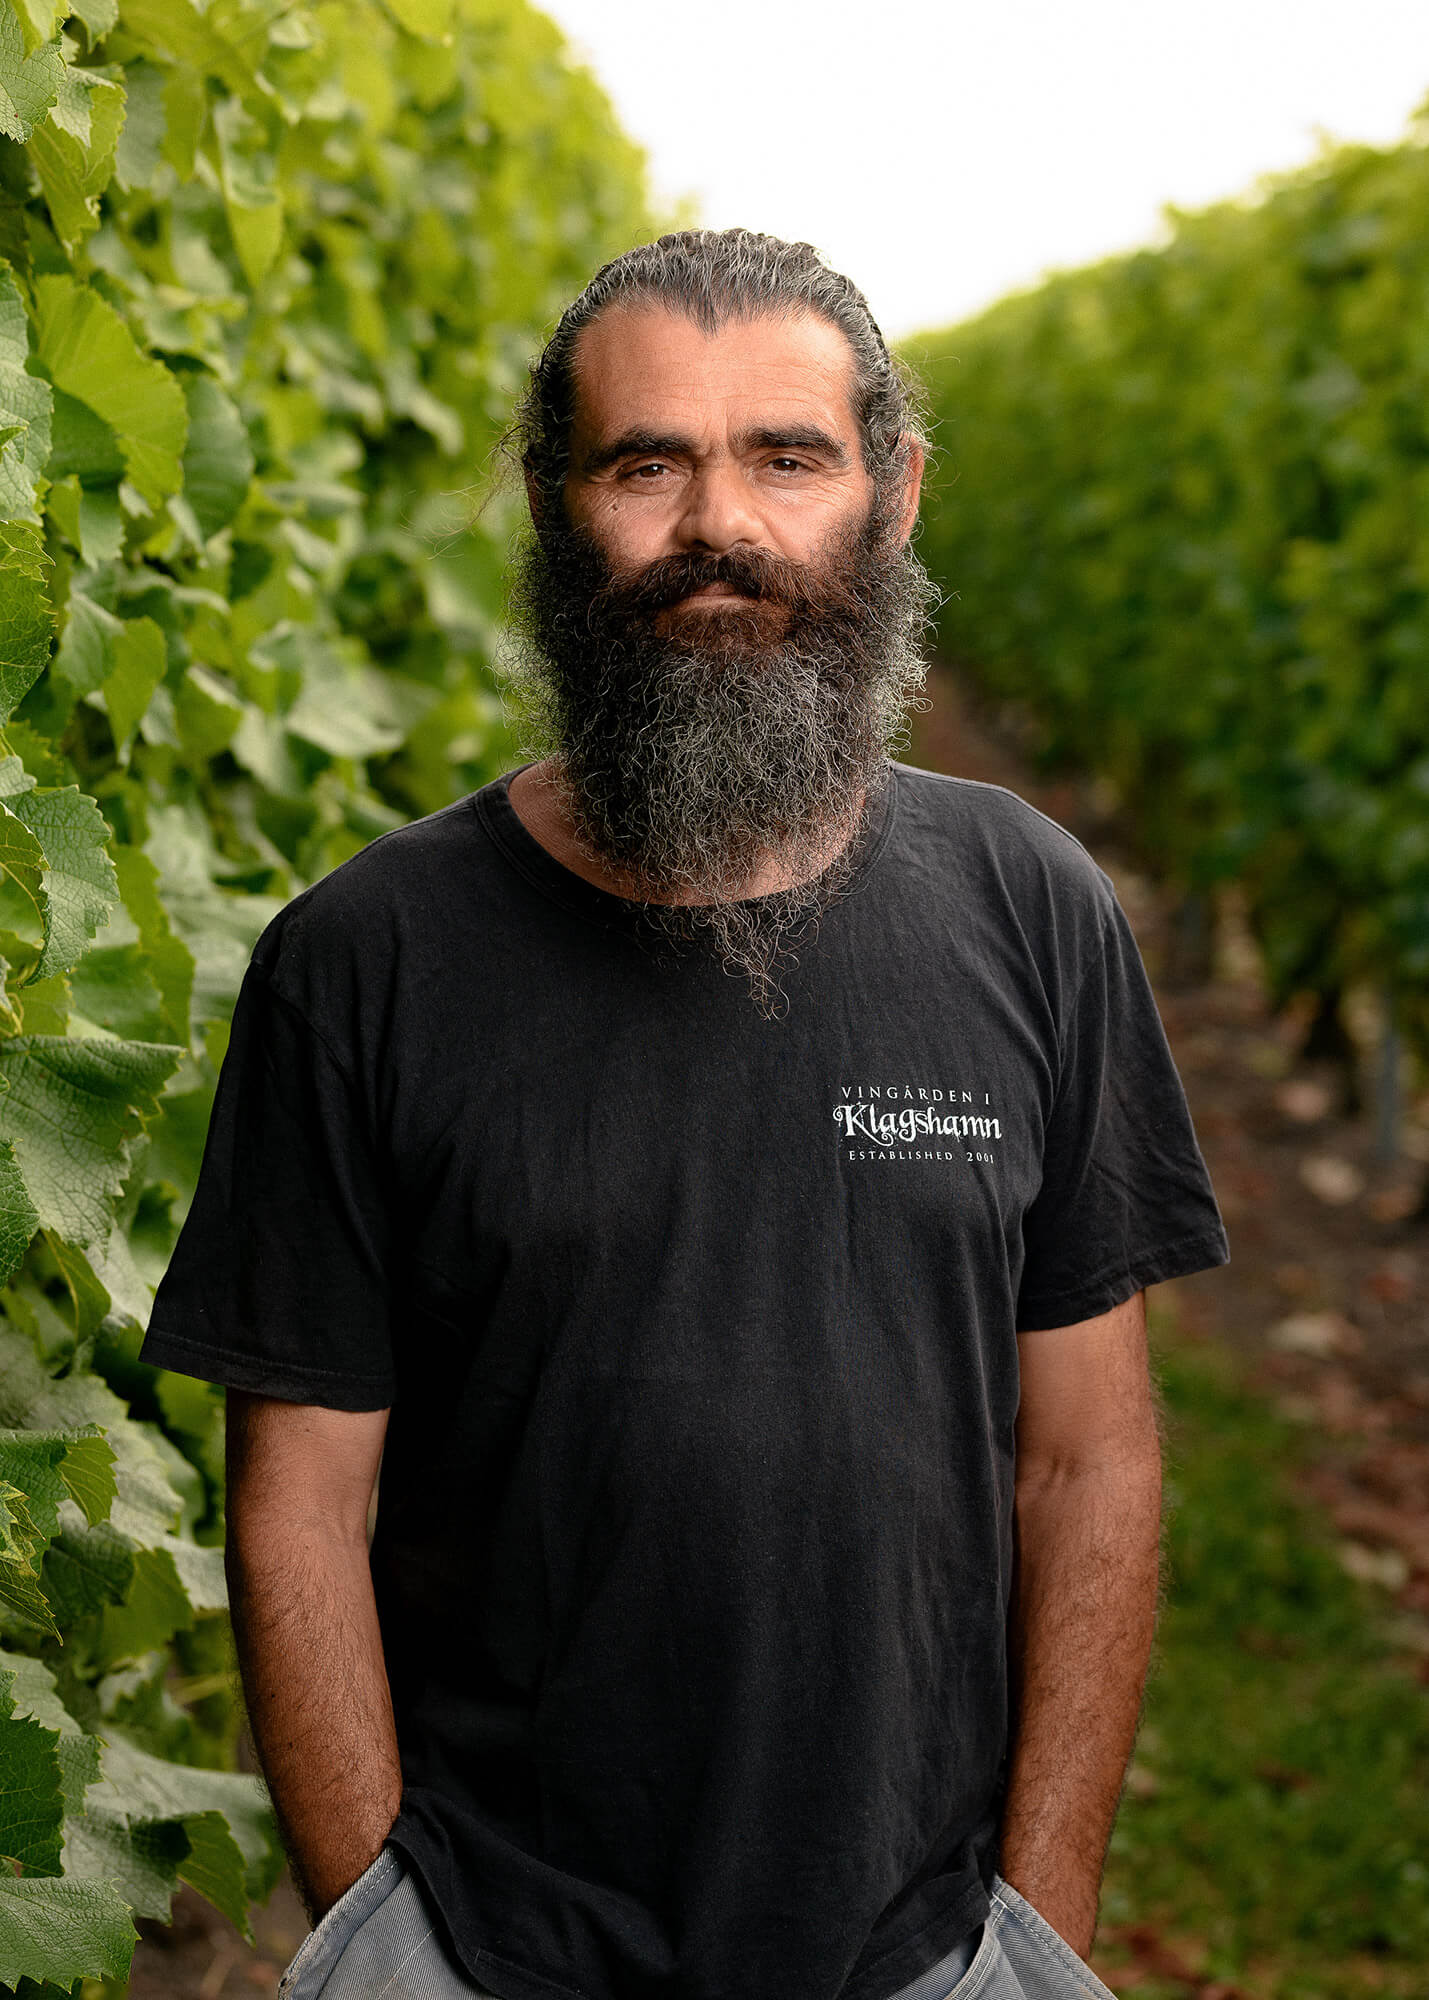 Portrait of Klagshamn vineyard owner